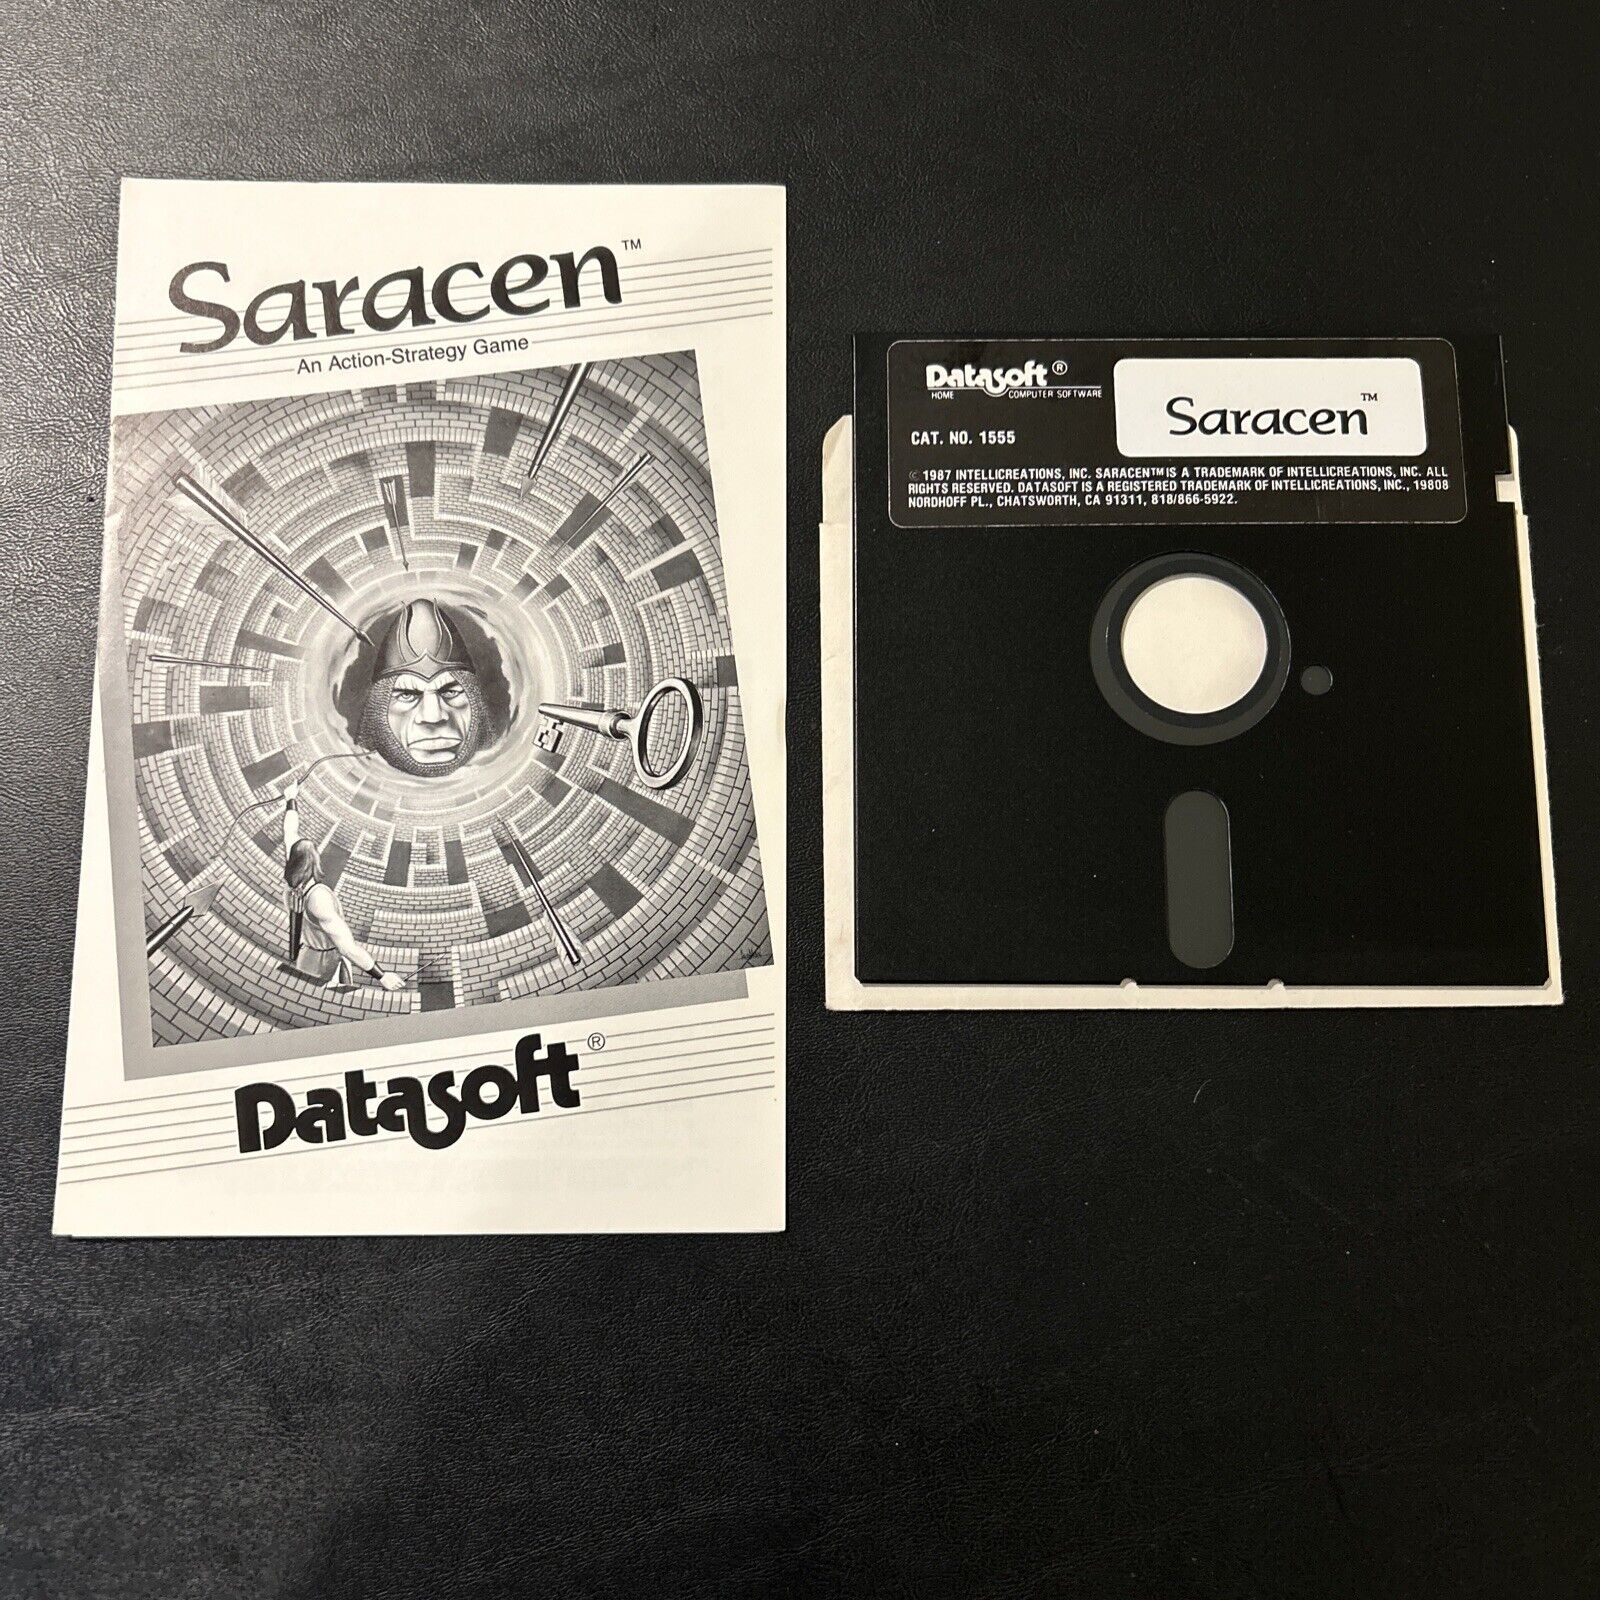 Saracen 5.25” Floppy Disk, Datasoft Computer Software